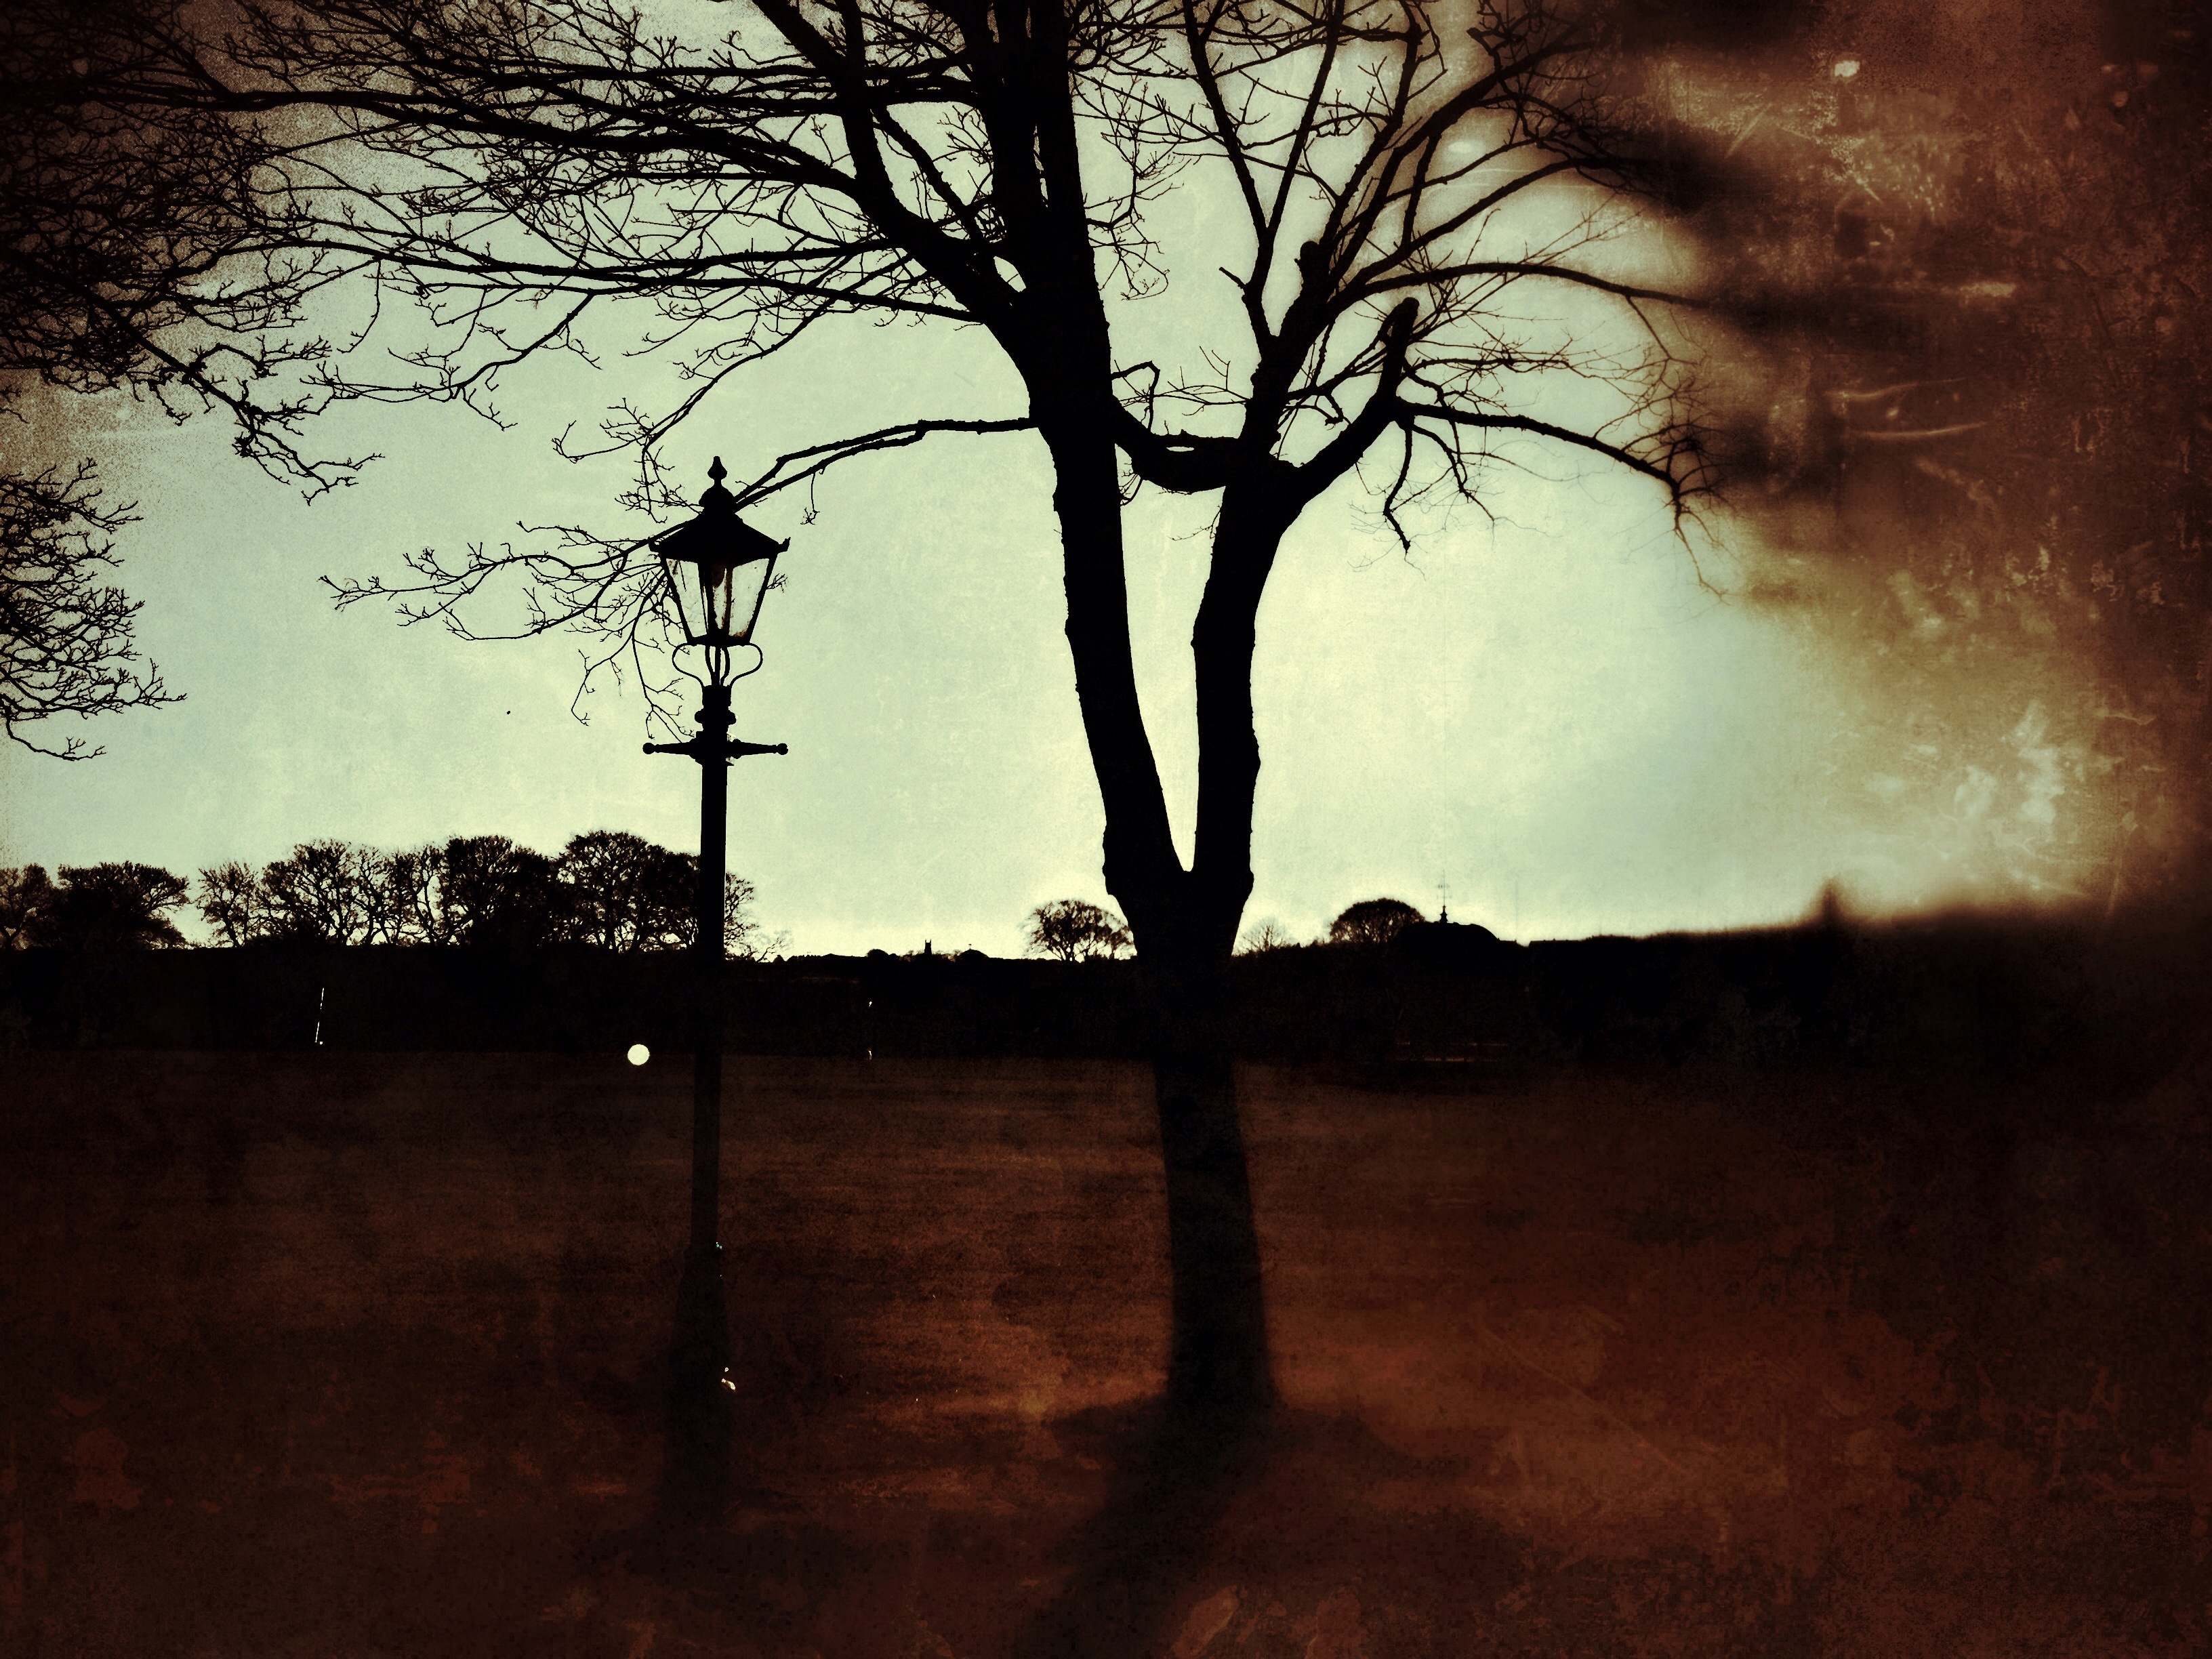 Photograph: Tree